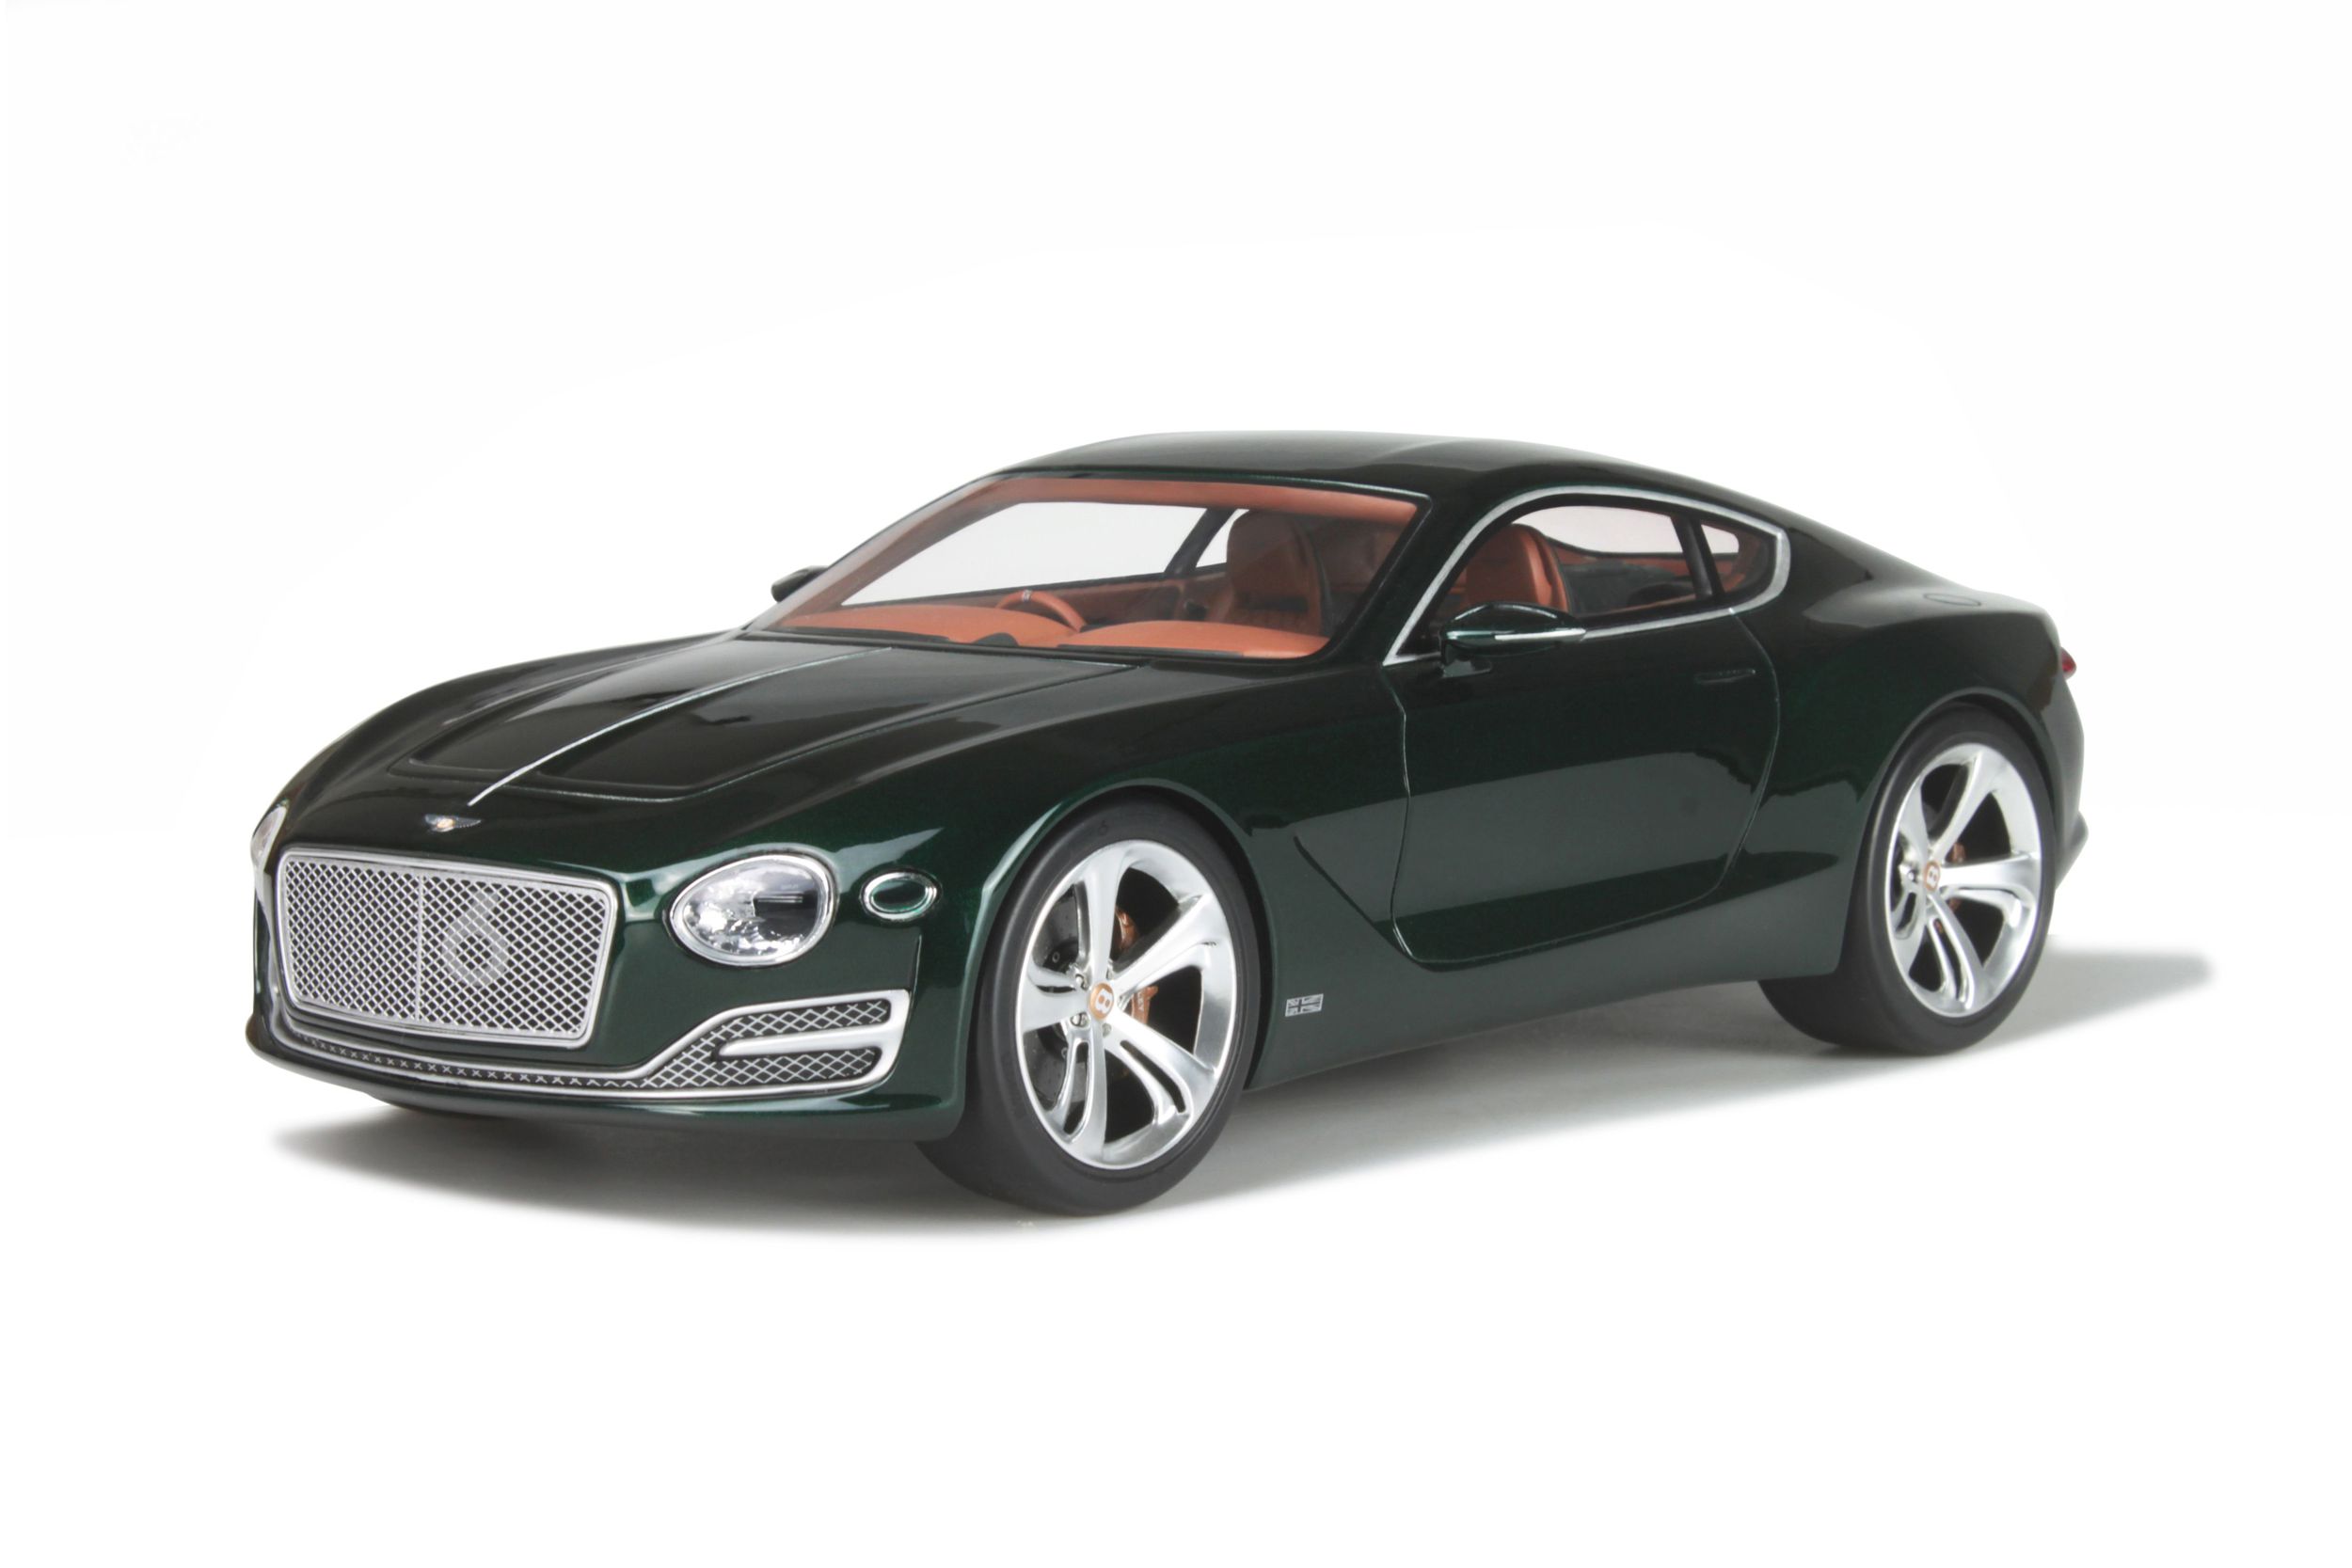 Bentley Exp 10 Speed 6 Concept Model Car Collection Gt Spirit